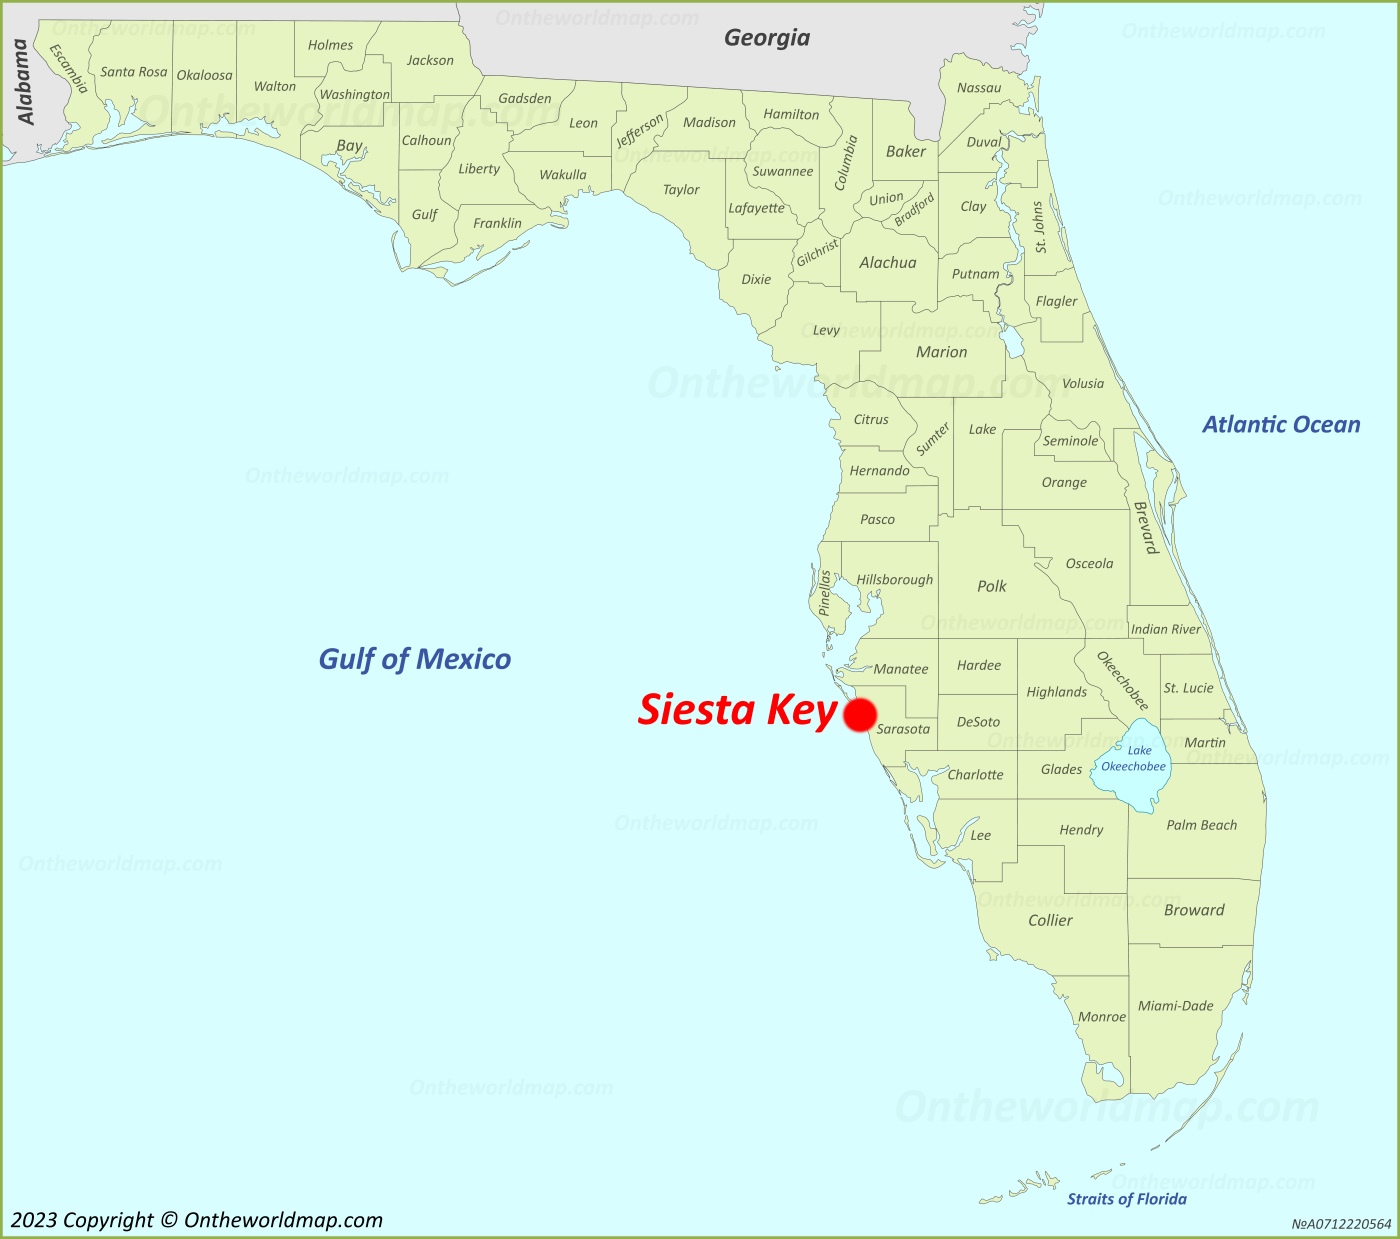 Siesta Key Location On The Florida Map